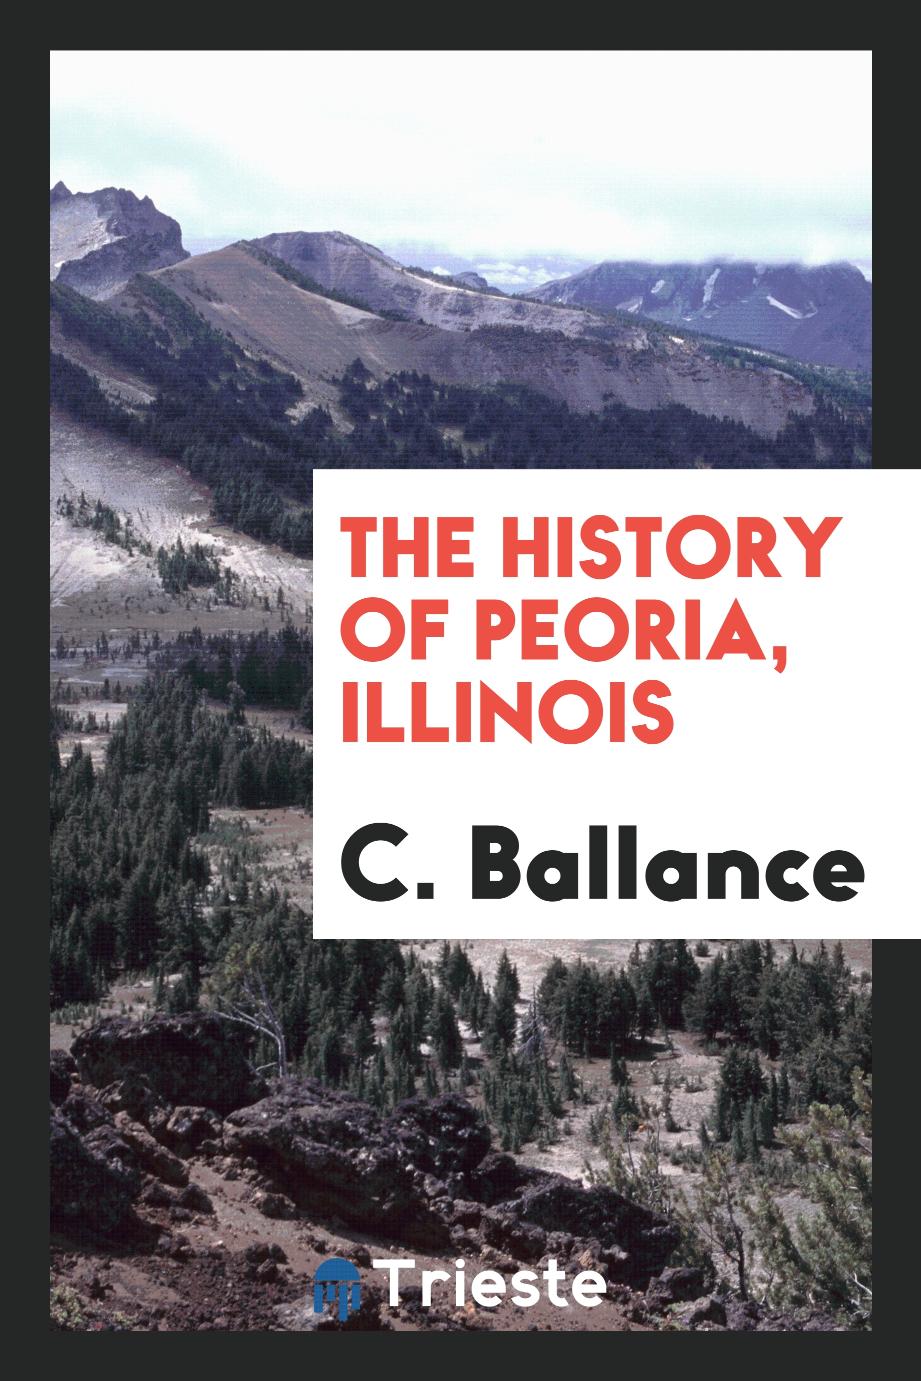 The history of Peoria, Illinois